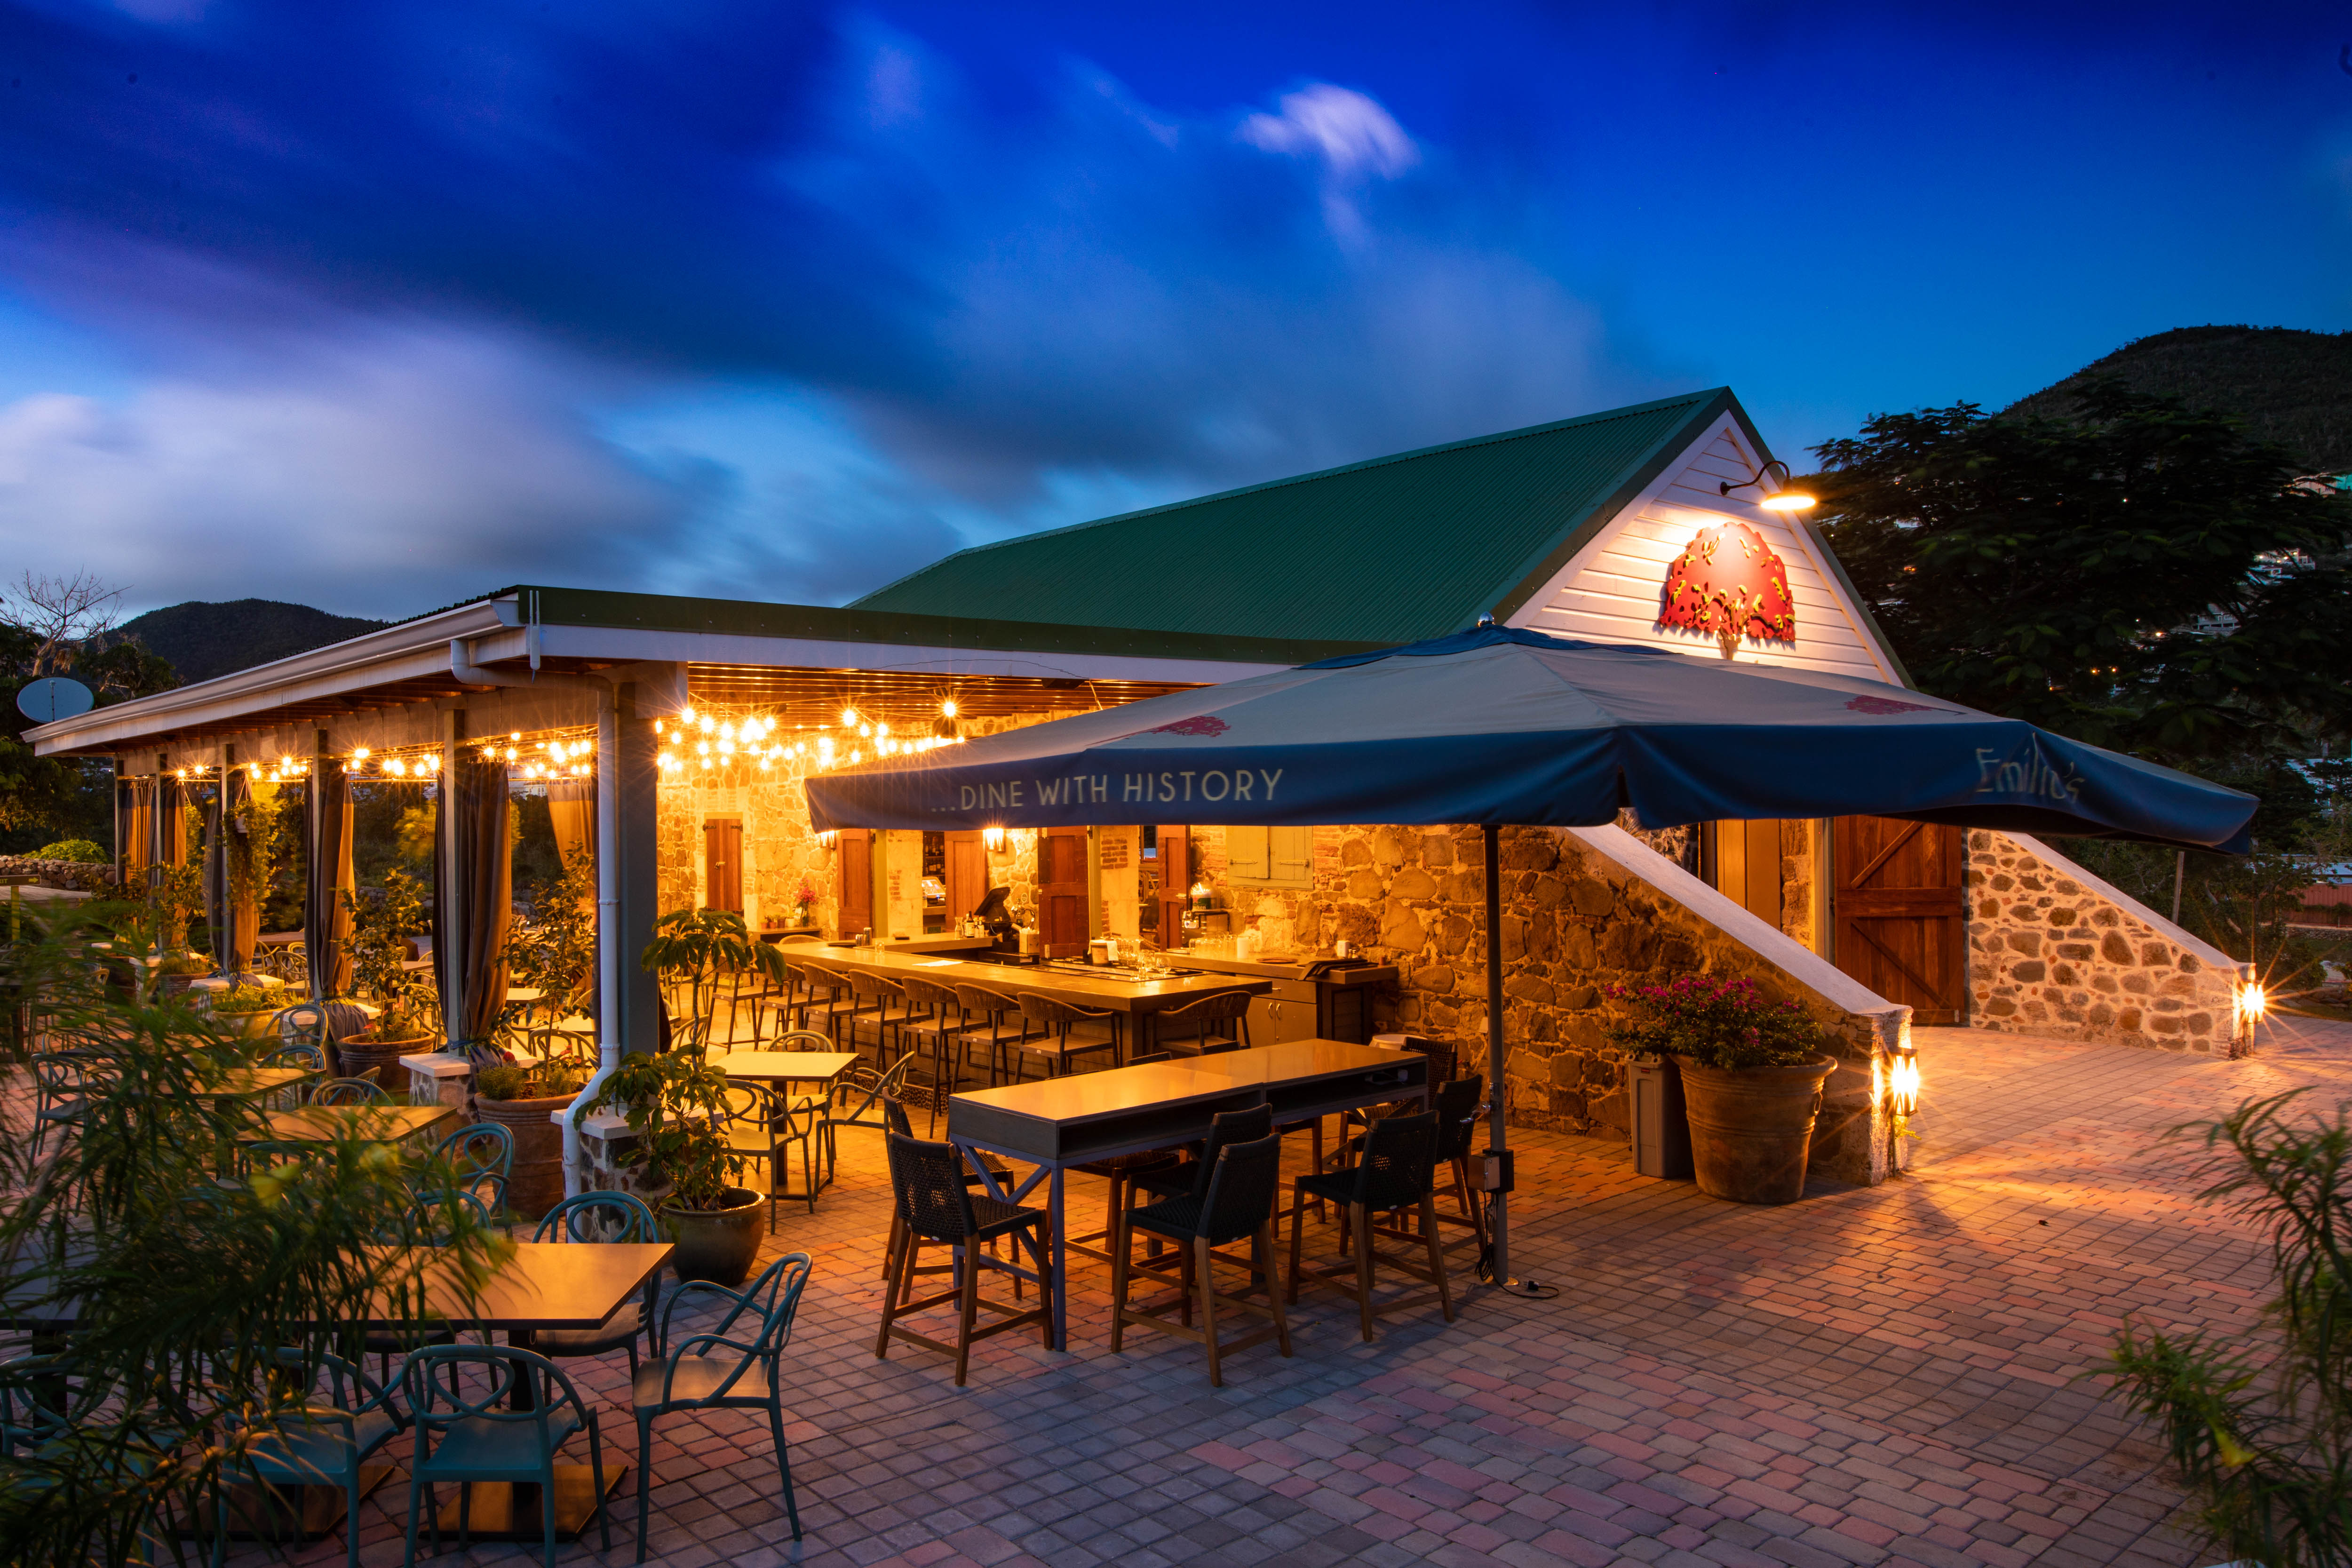 Rainforest Adventures Rockland Estate guests "dine with history” at Emilio's Restaurant in St. Maarten.